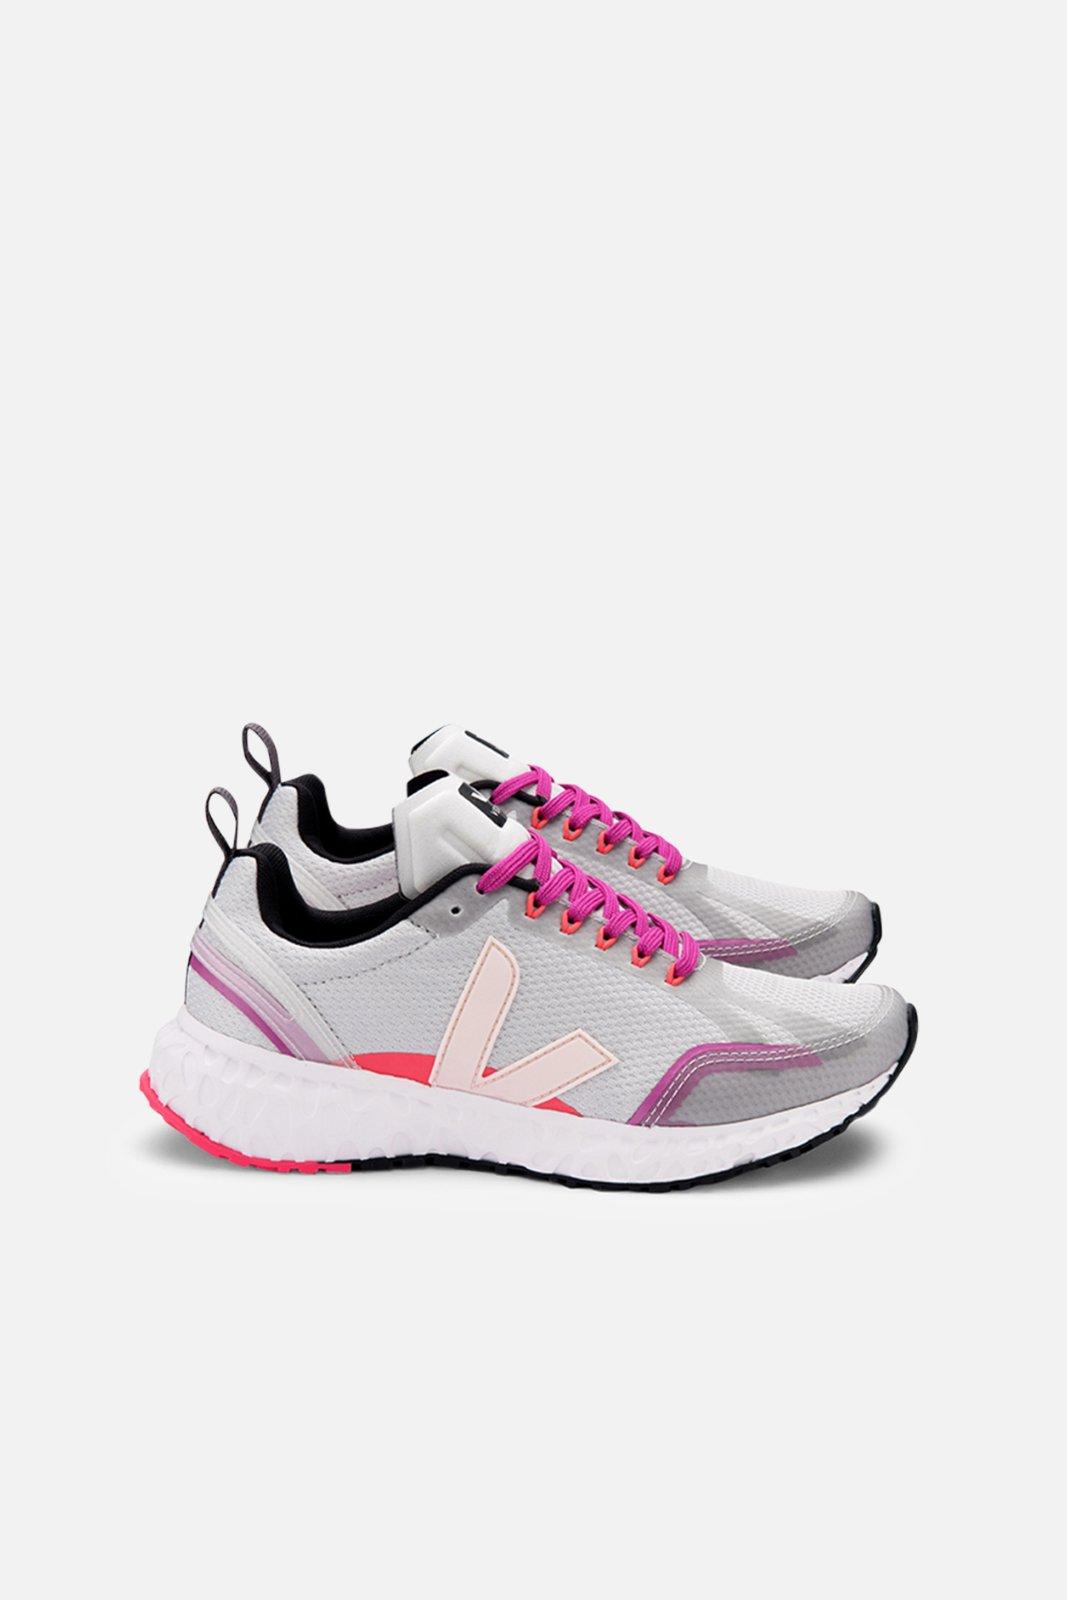 Vejas Cotton Condor Running Sneaker in Pink - Lyst